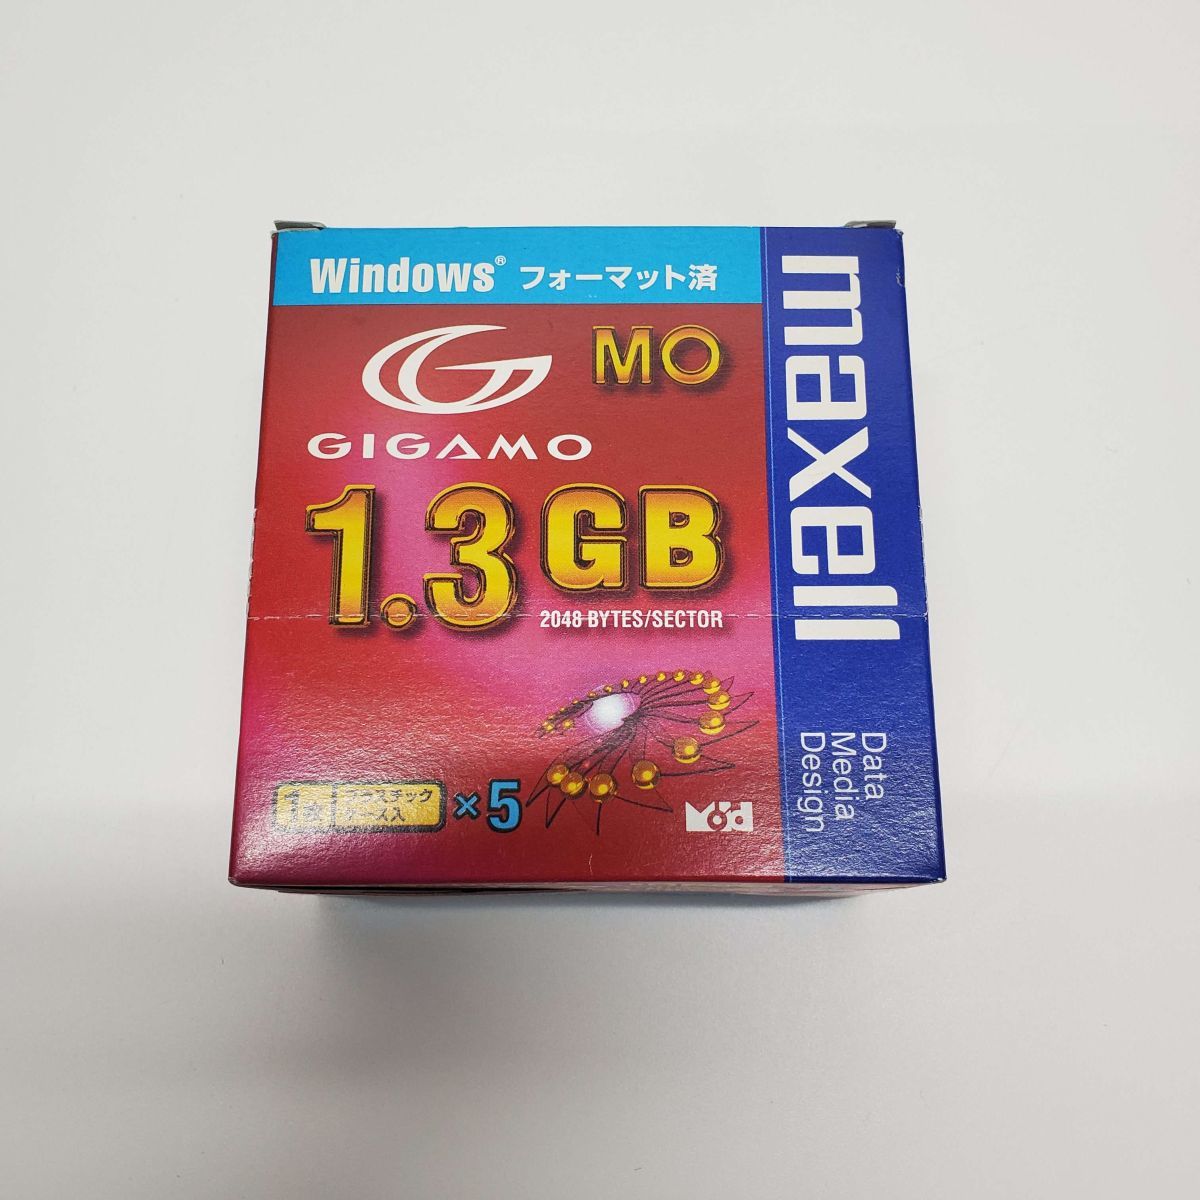 @T0637[ нераспечатанный товар ]maxell GIGAMO 1.3GB Windows формат завершено MA-M1300WIN.B1P5 MO диск 5 шт. комплект с коробкой 